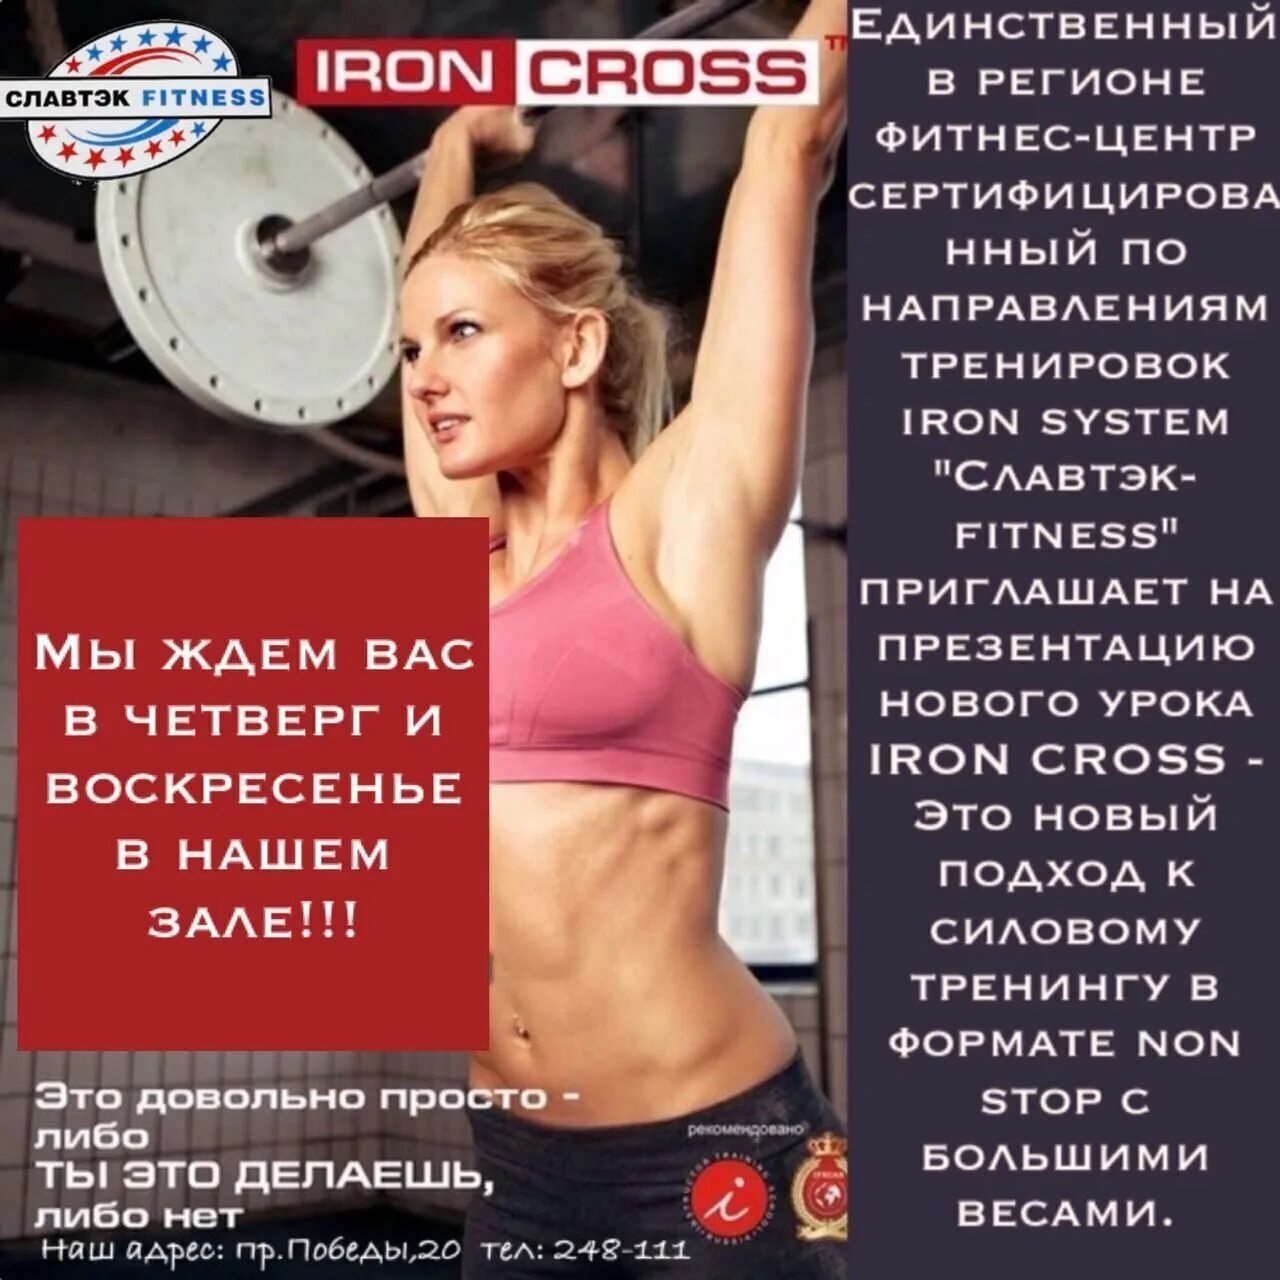 Hot iron что это. Hot Iron Cross тренировка. Hot Iron Iron Cross. Тренировка с железом. Hot Iron тренировка что это.